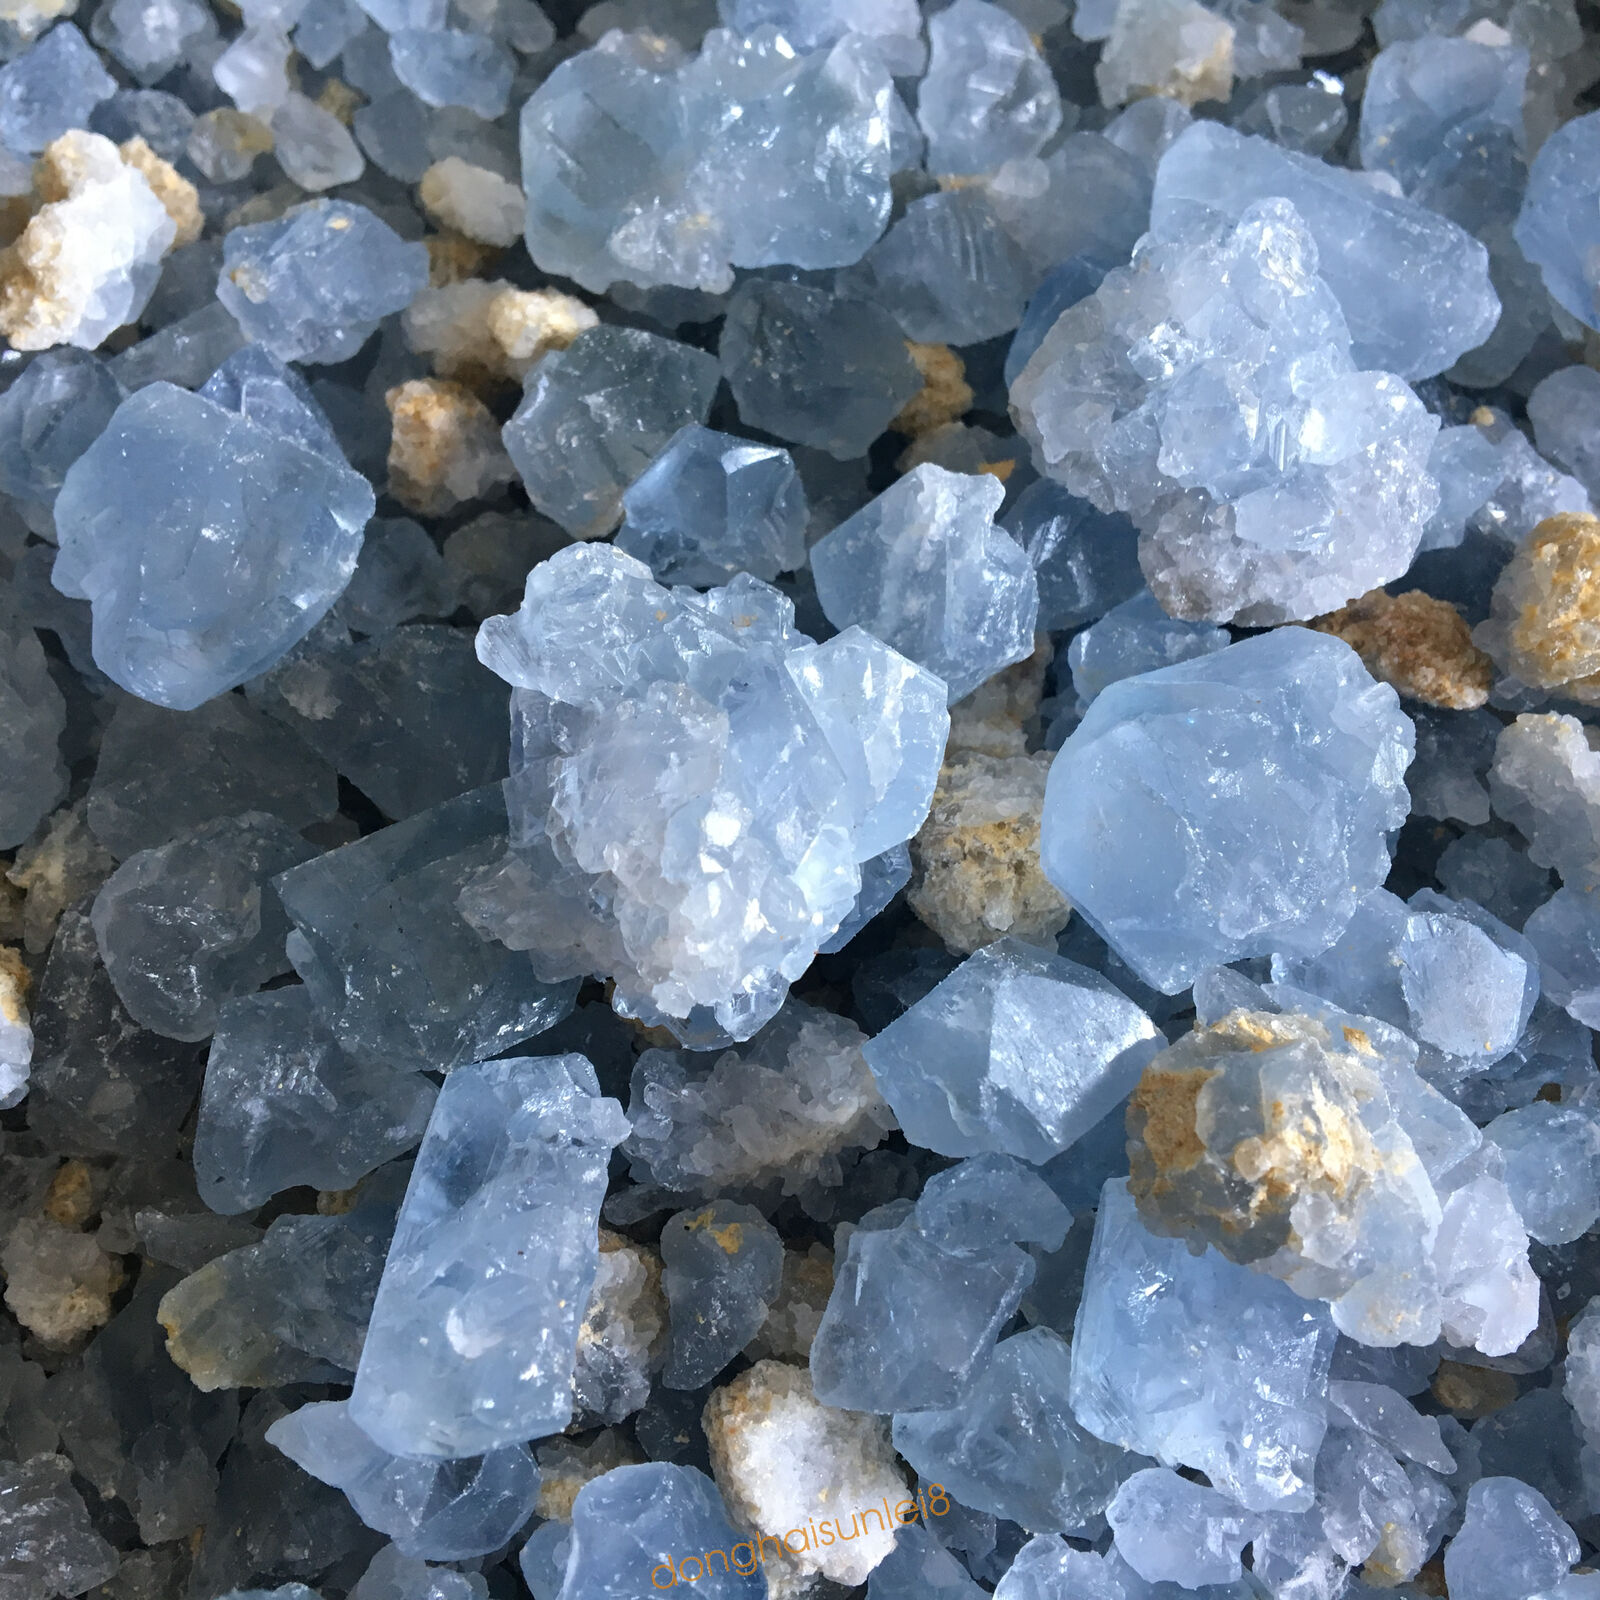 2.2lb Natural blue celestite mineral Quartz Crystal rough Stone Gravel Healing